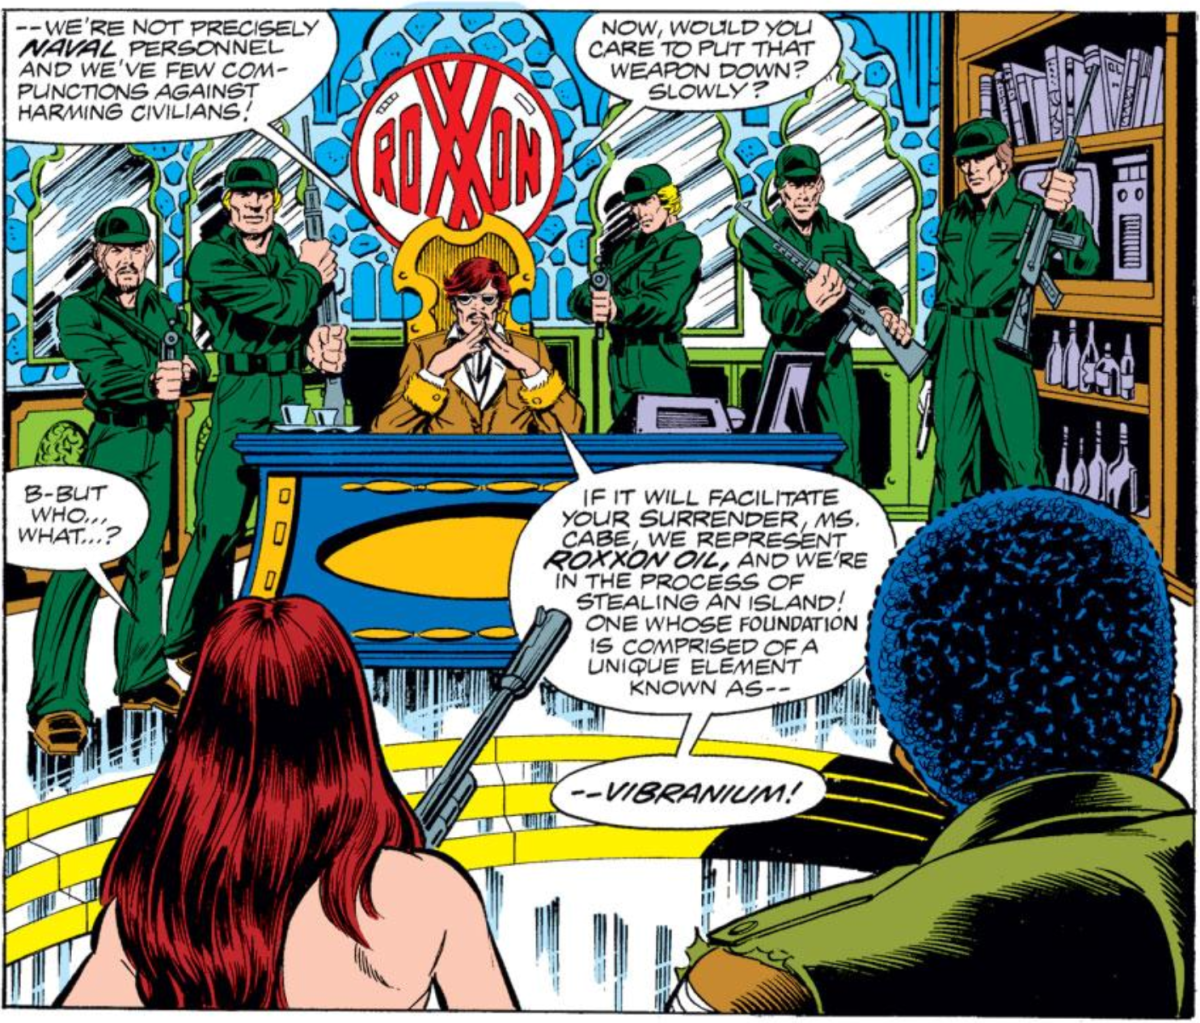 Star Fox Nod in Marvel Comic